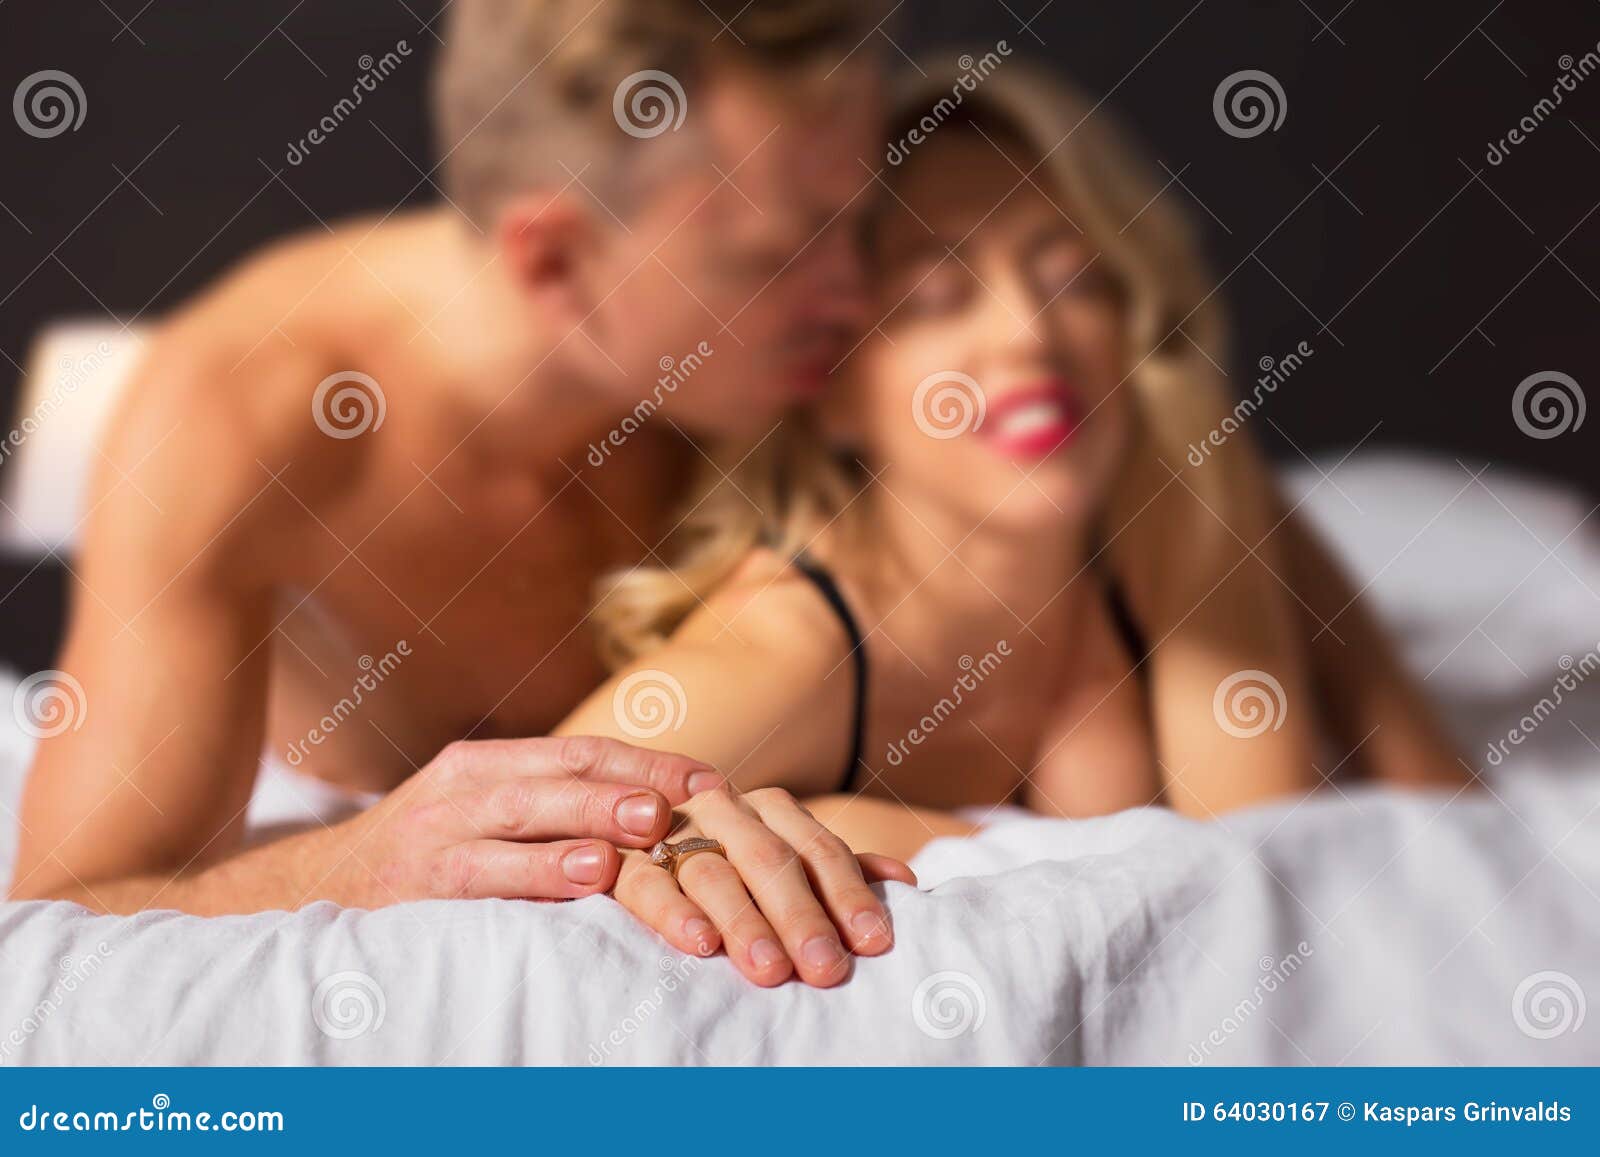 bryan james espiritu share male and female making love photos